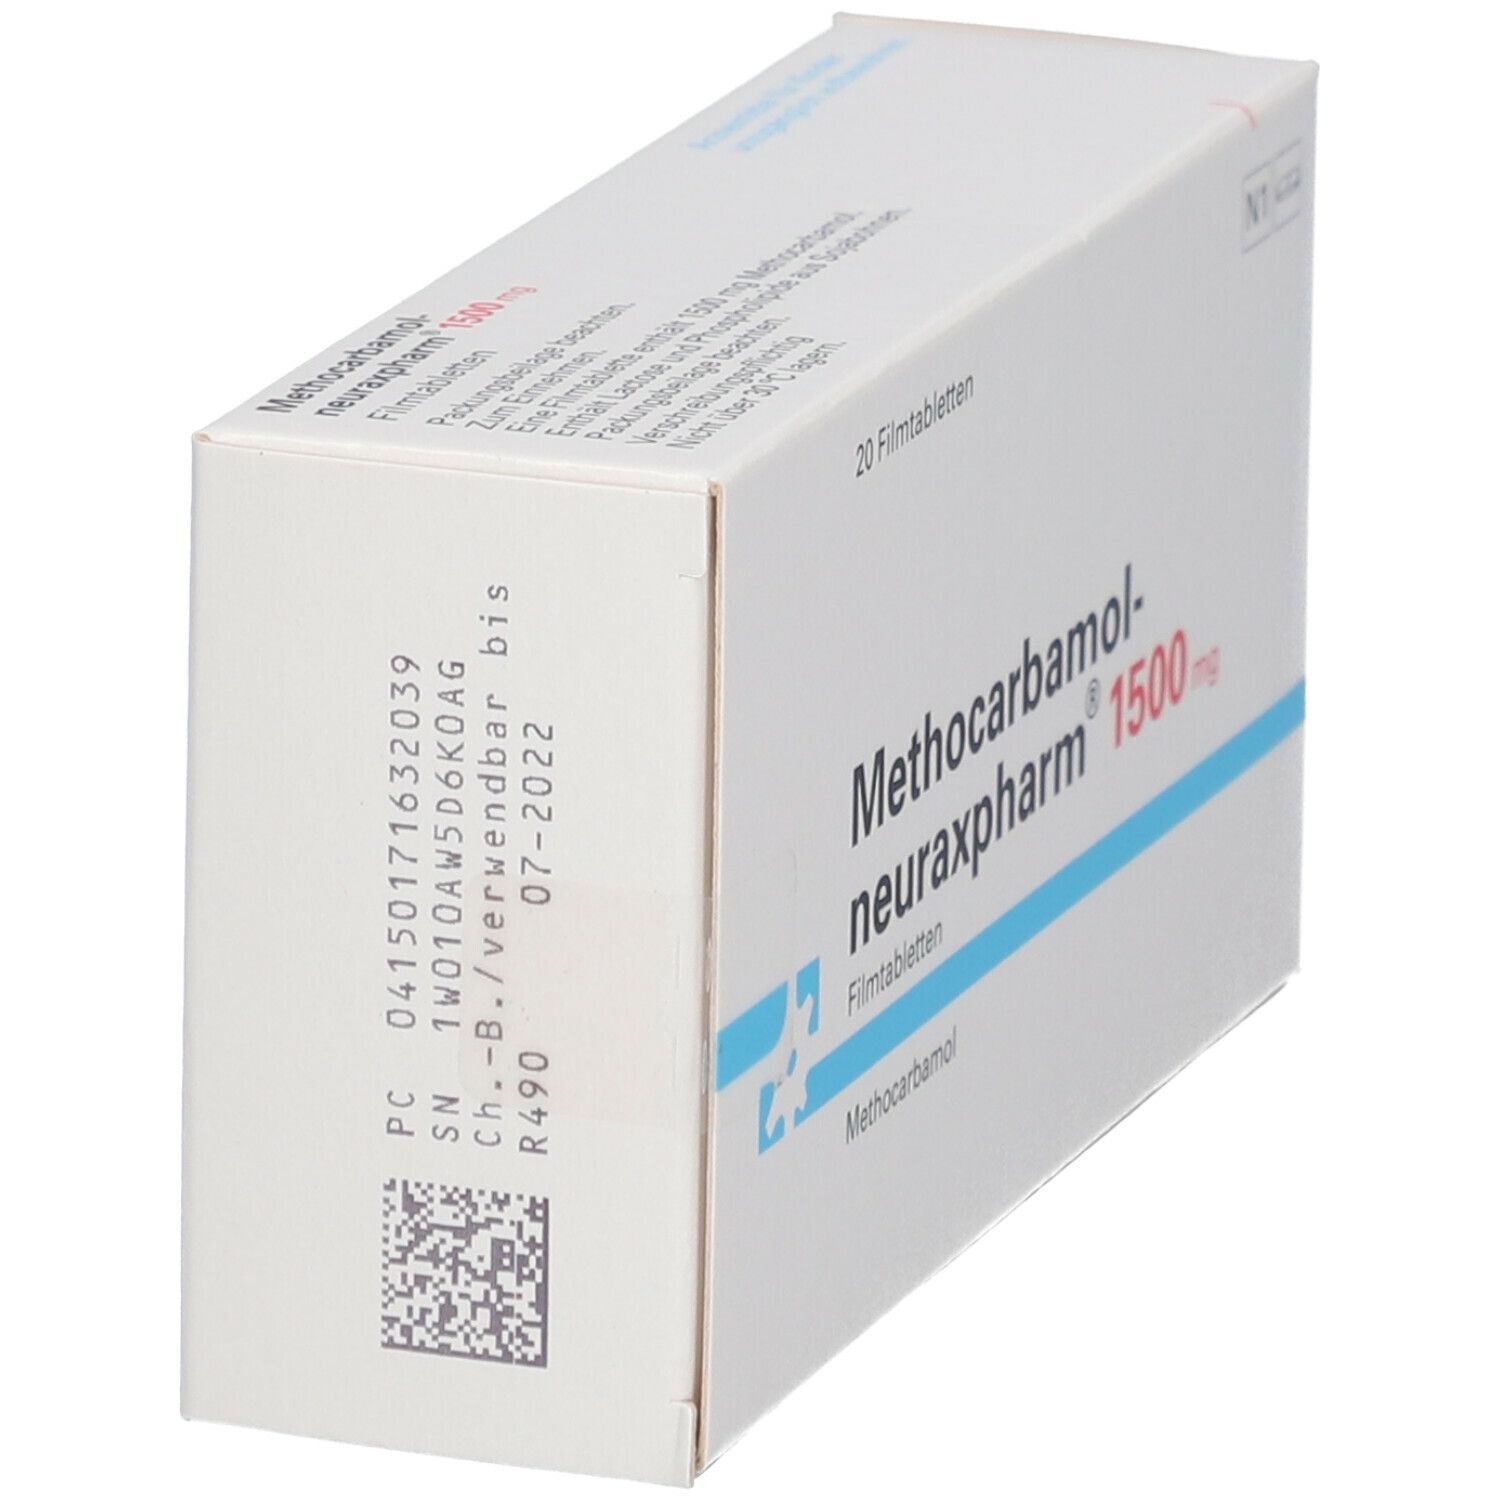 Methocarbamol-Neuraxpharm 1500 mg